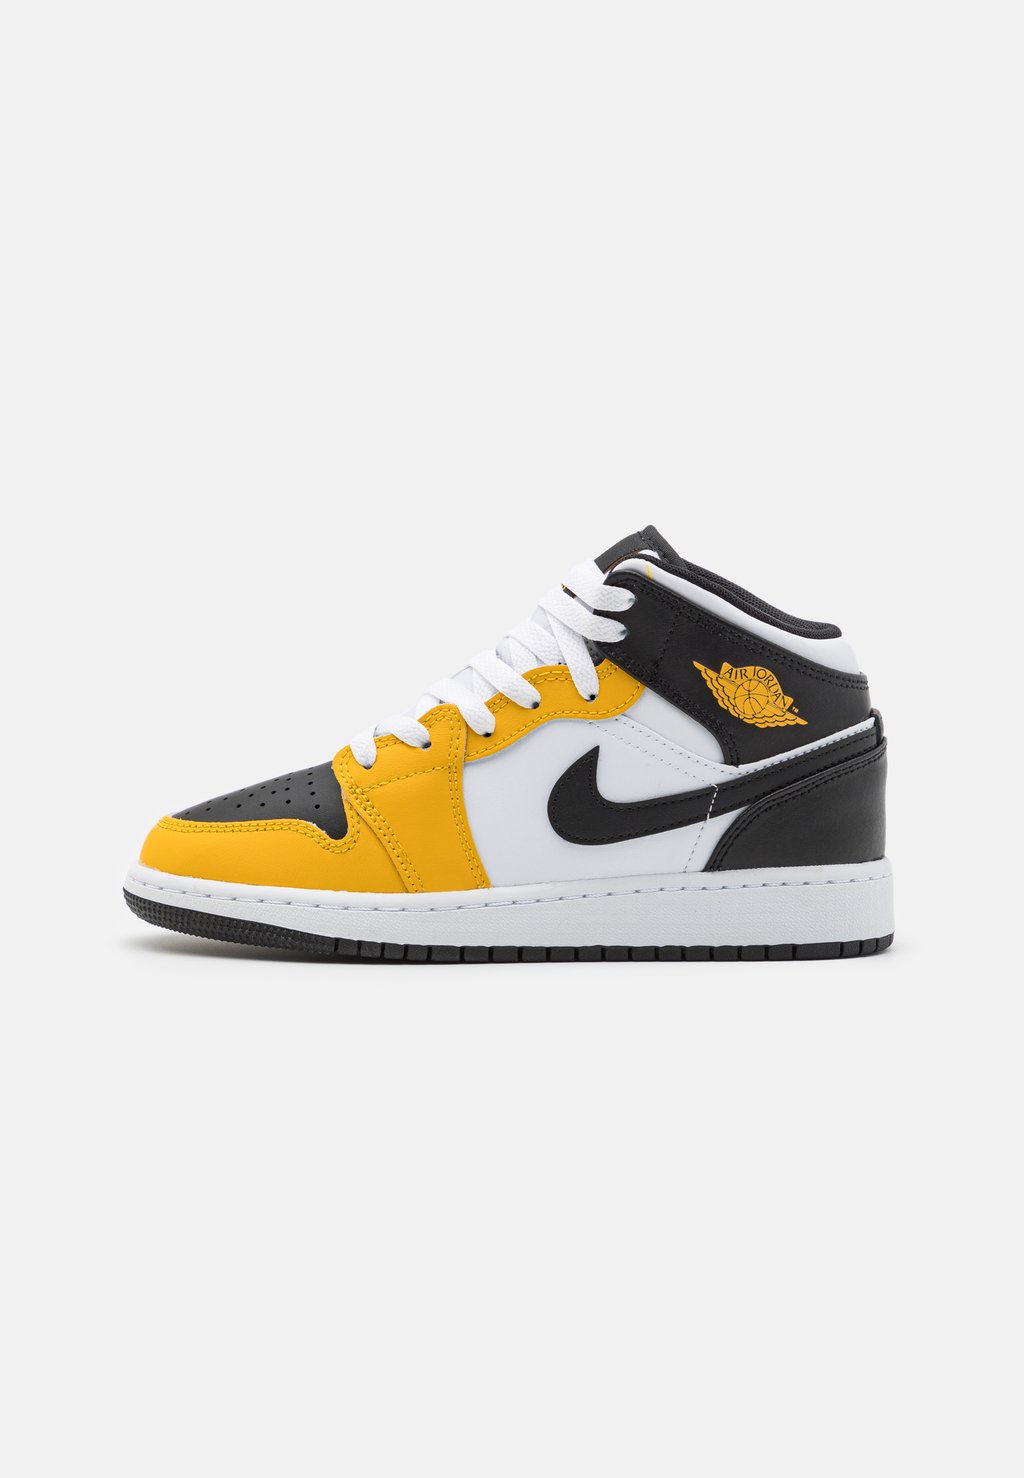 Баскетбольные кроссовки Air Jordan 1 Mid Unisex Jordan, цвет yellow ochre/black/white кроссовки guess vice white ochre